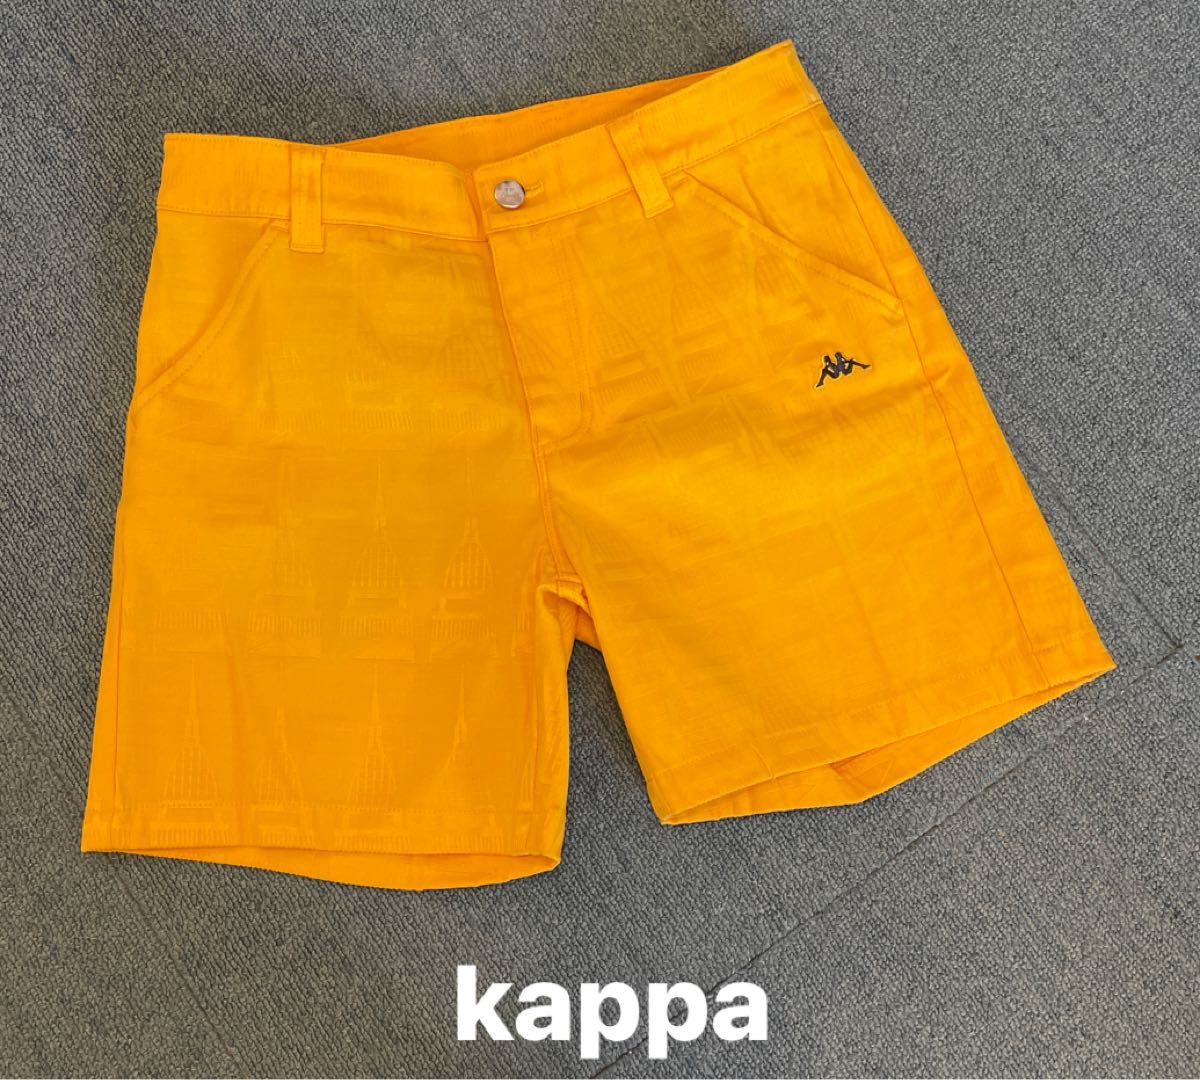 kappa ハーフパンツ Mサイズ 新品 未使用品 ゴルフ GOLF Yahoo